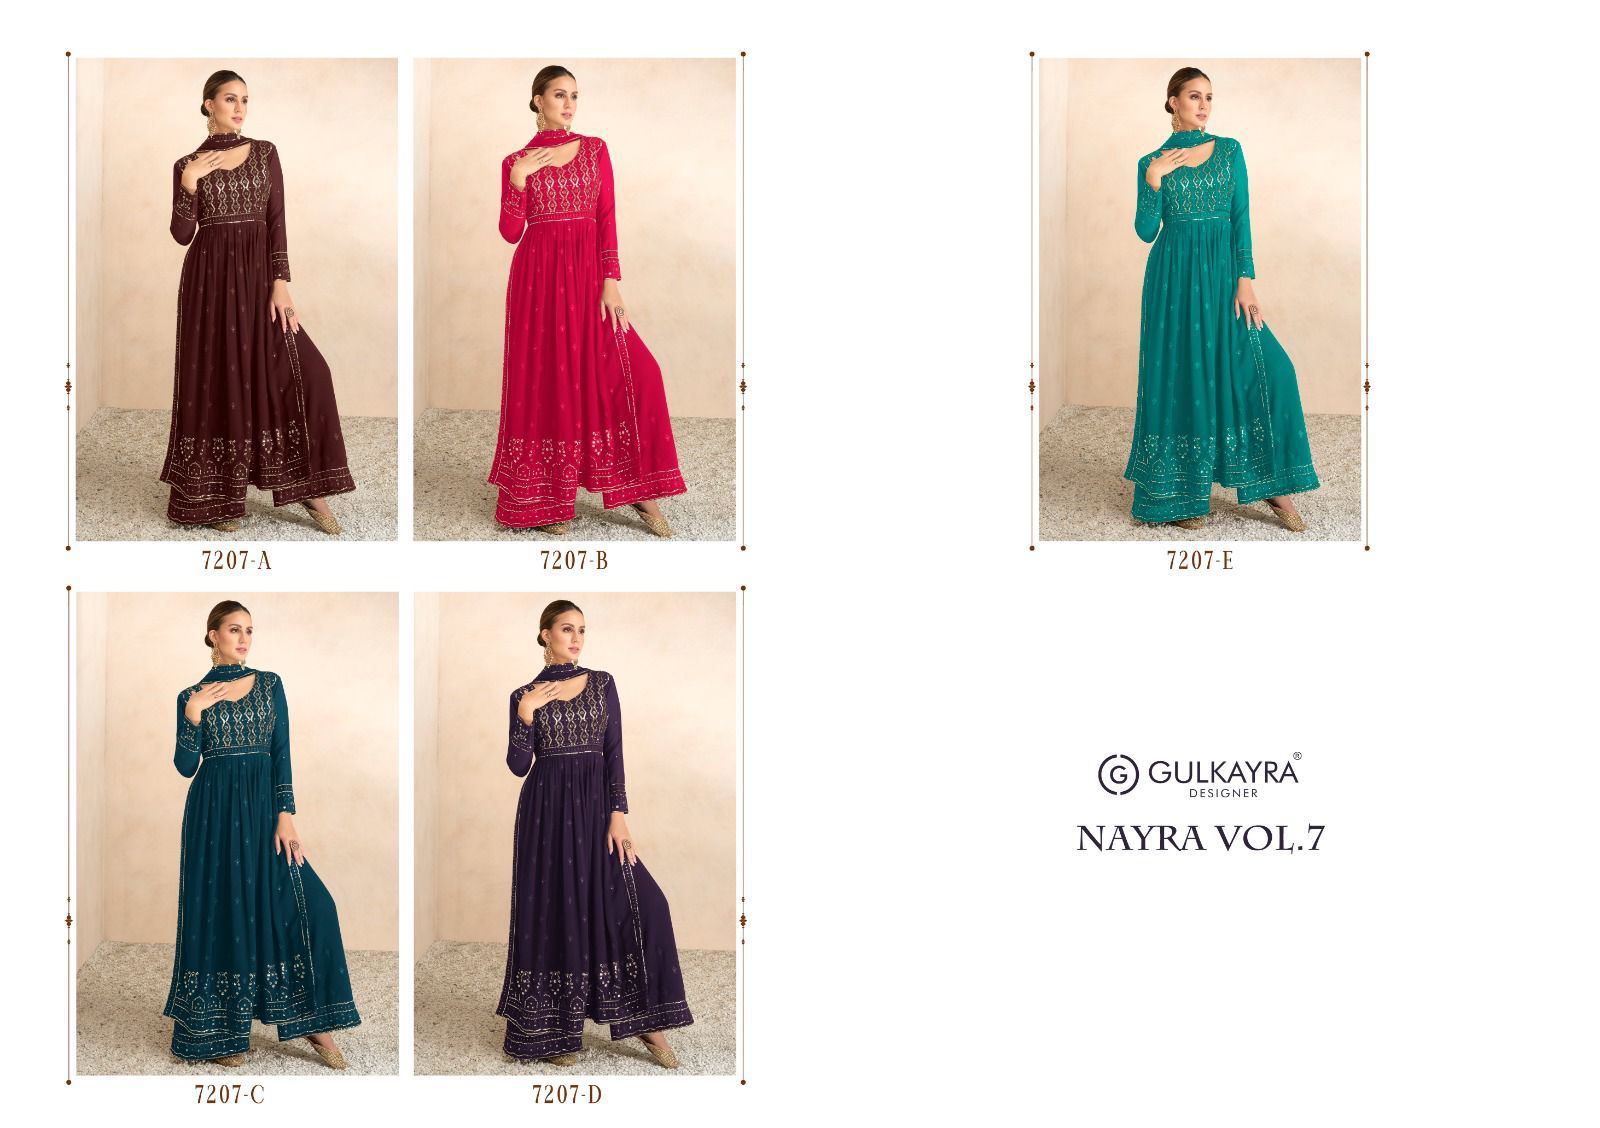 Gulkayra Nayra Vol 7 collection 6